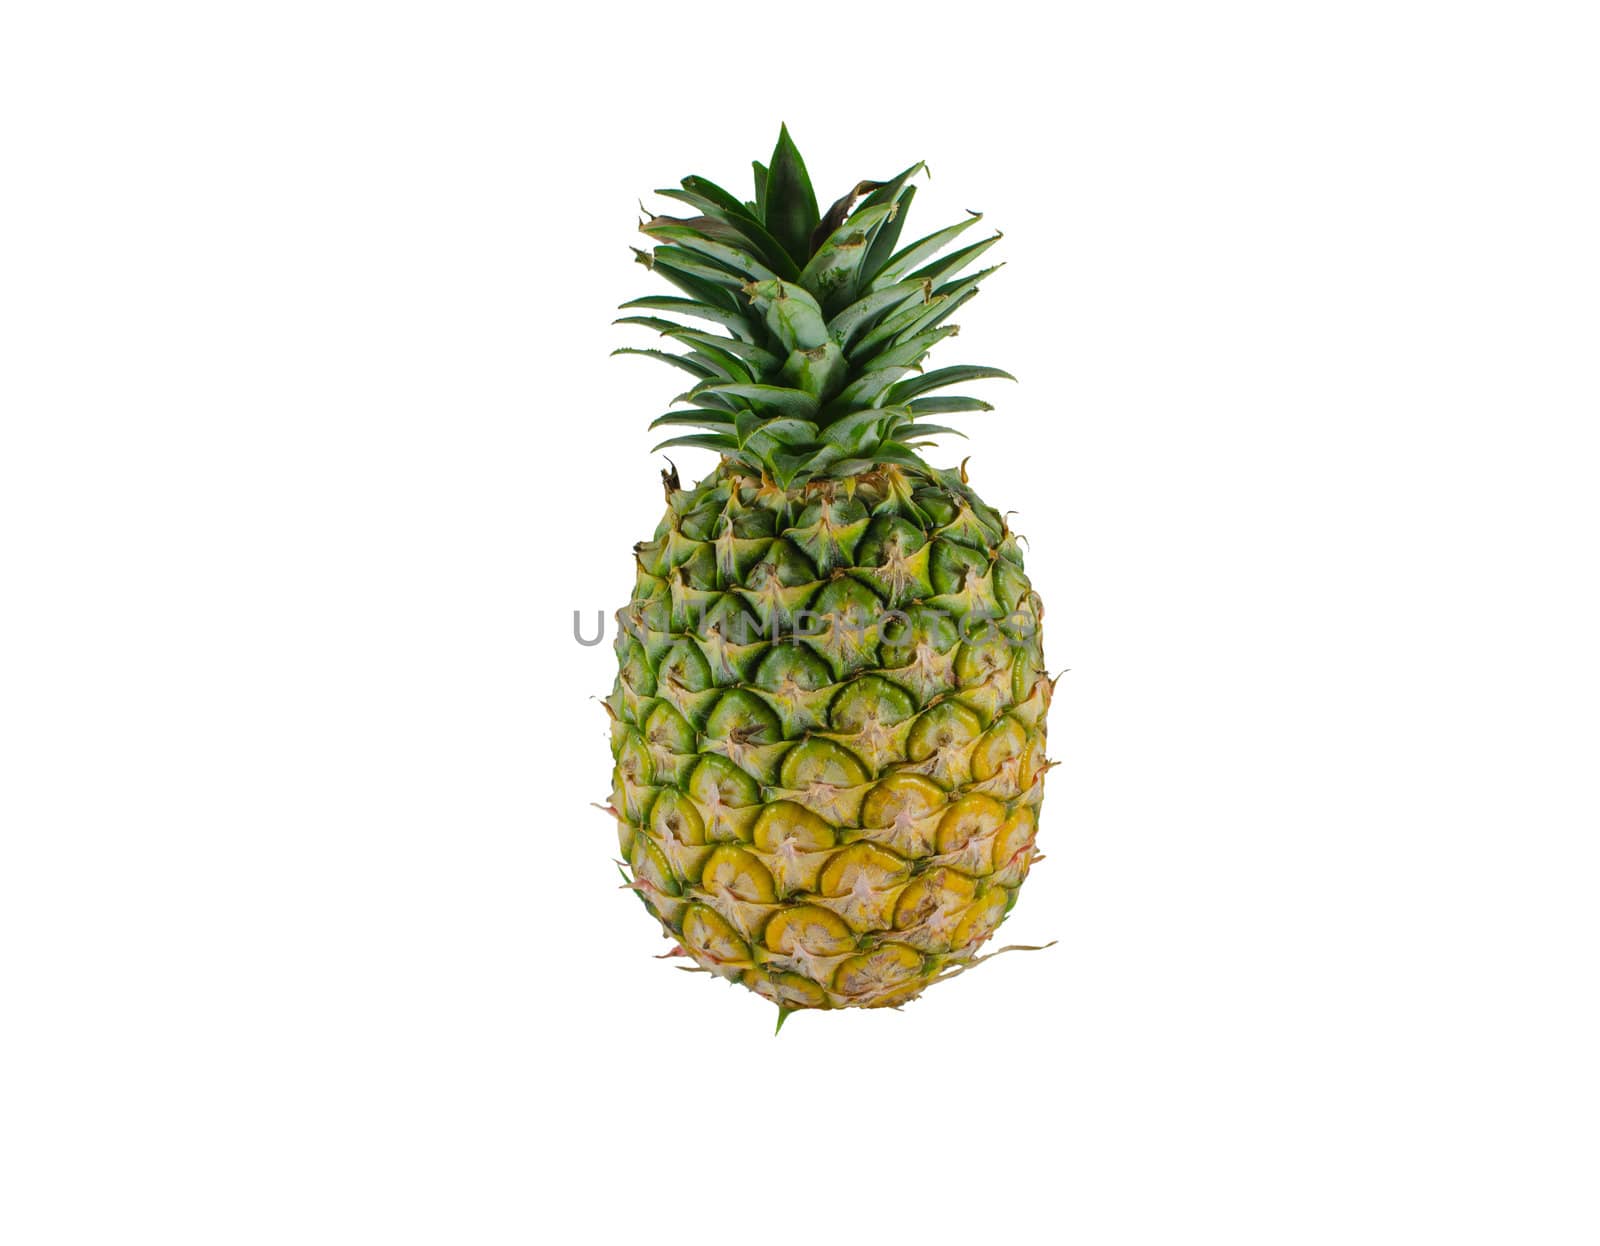 Pineapple by aoo3771